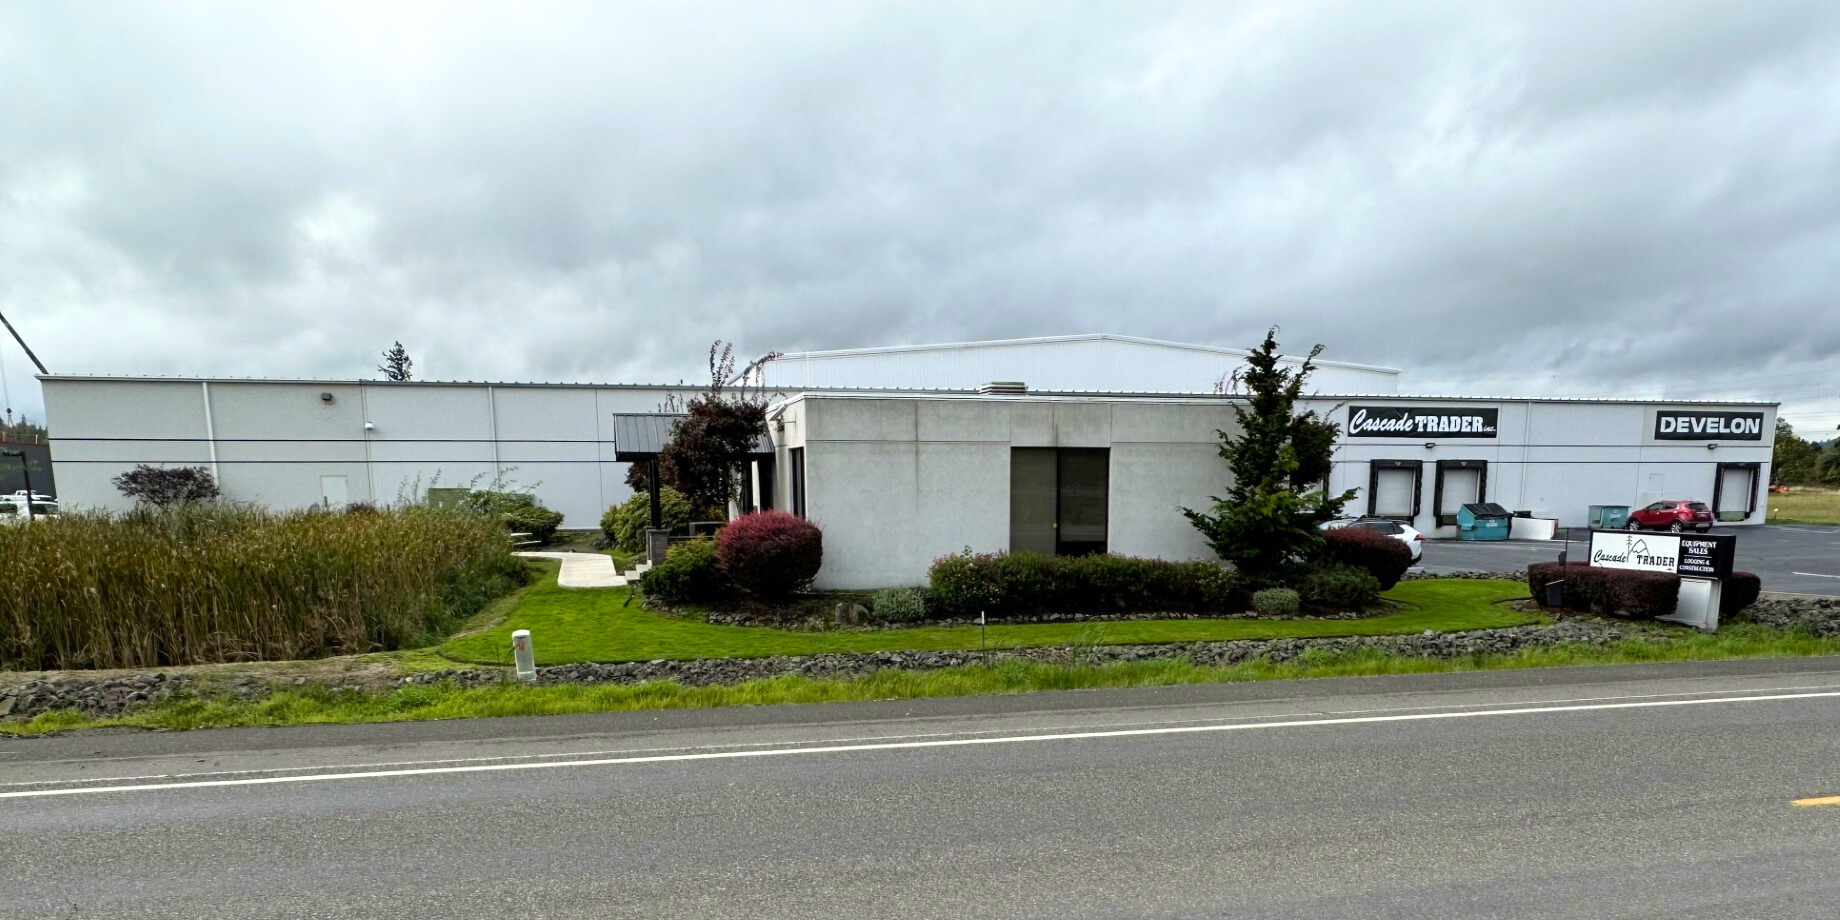 Cascade Trader's Chehalis, Washington facility at 215 Hamilton Rd N.